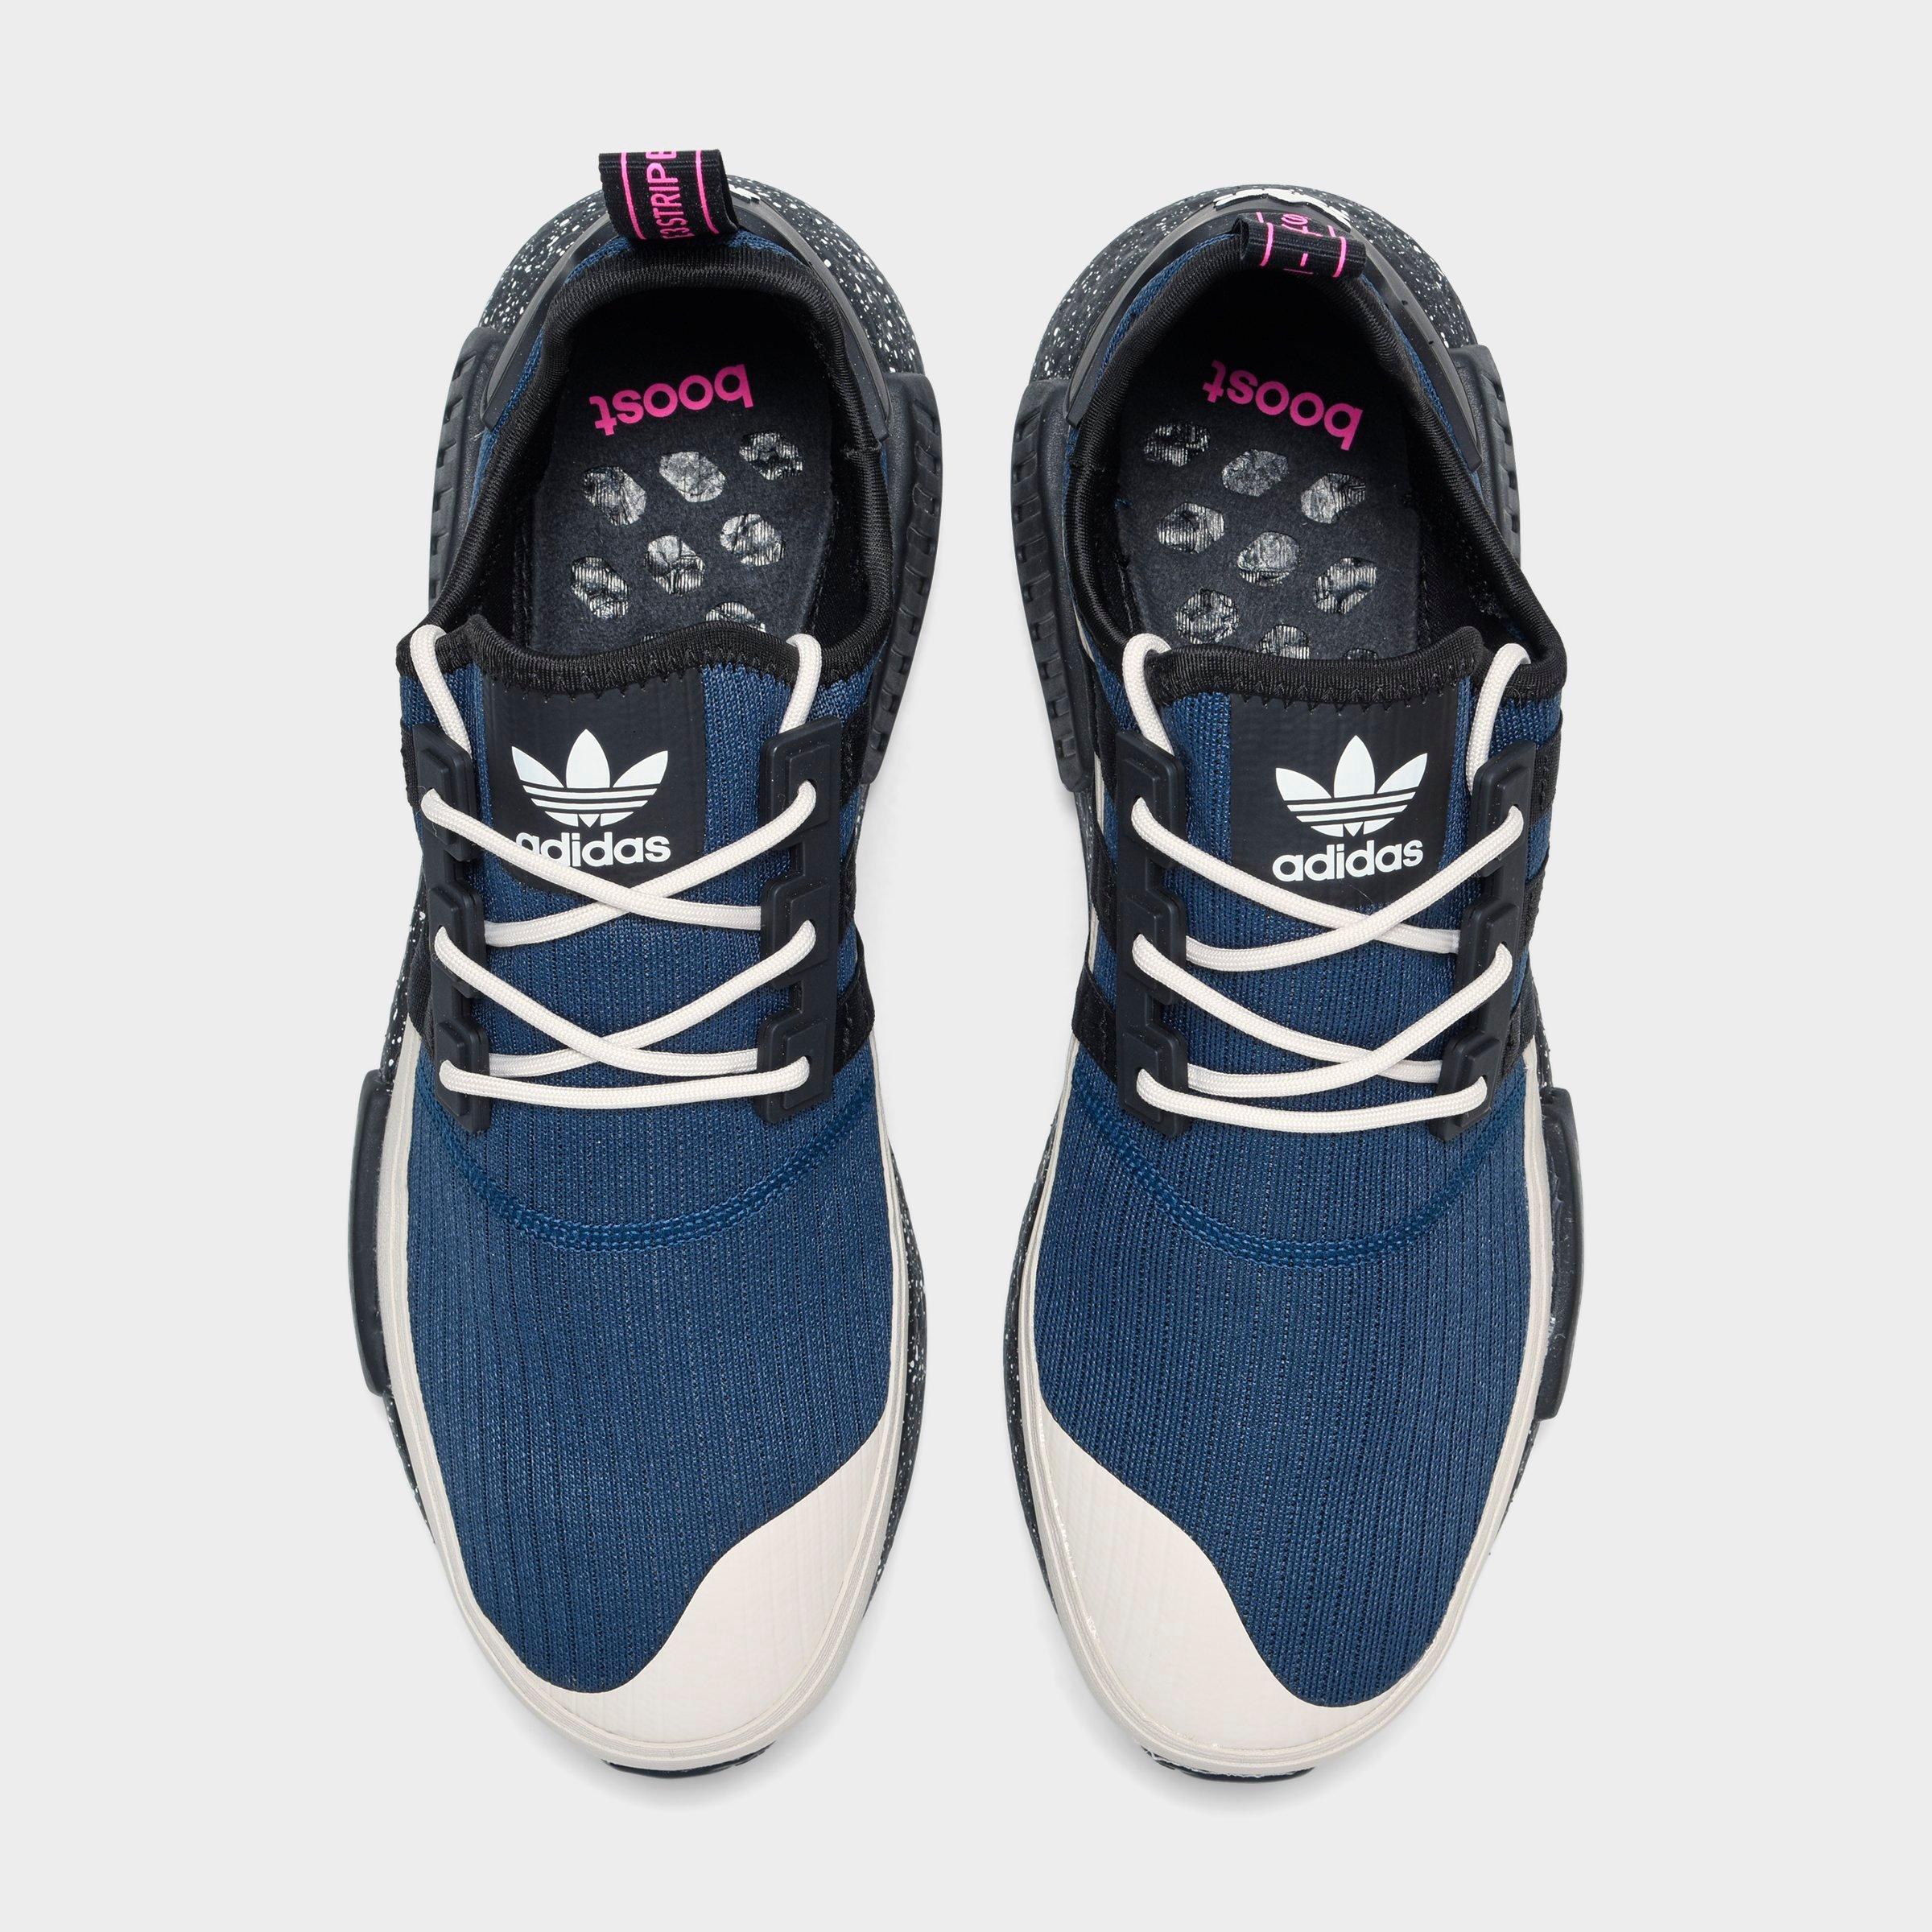 adidas running shoes nmd